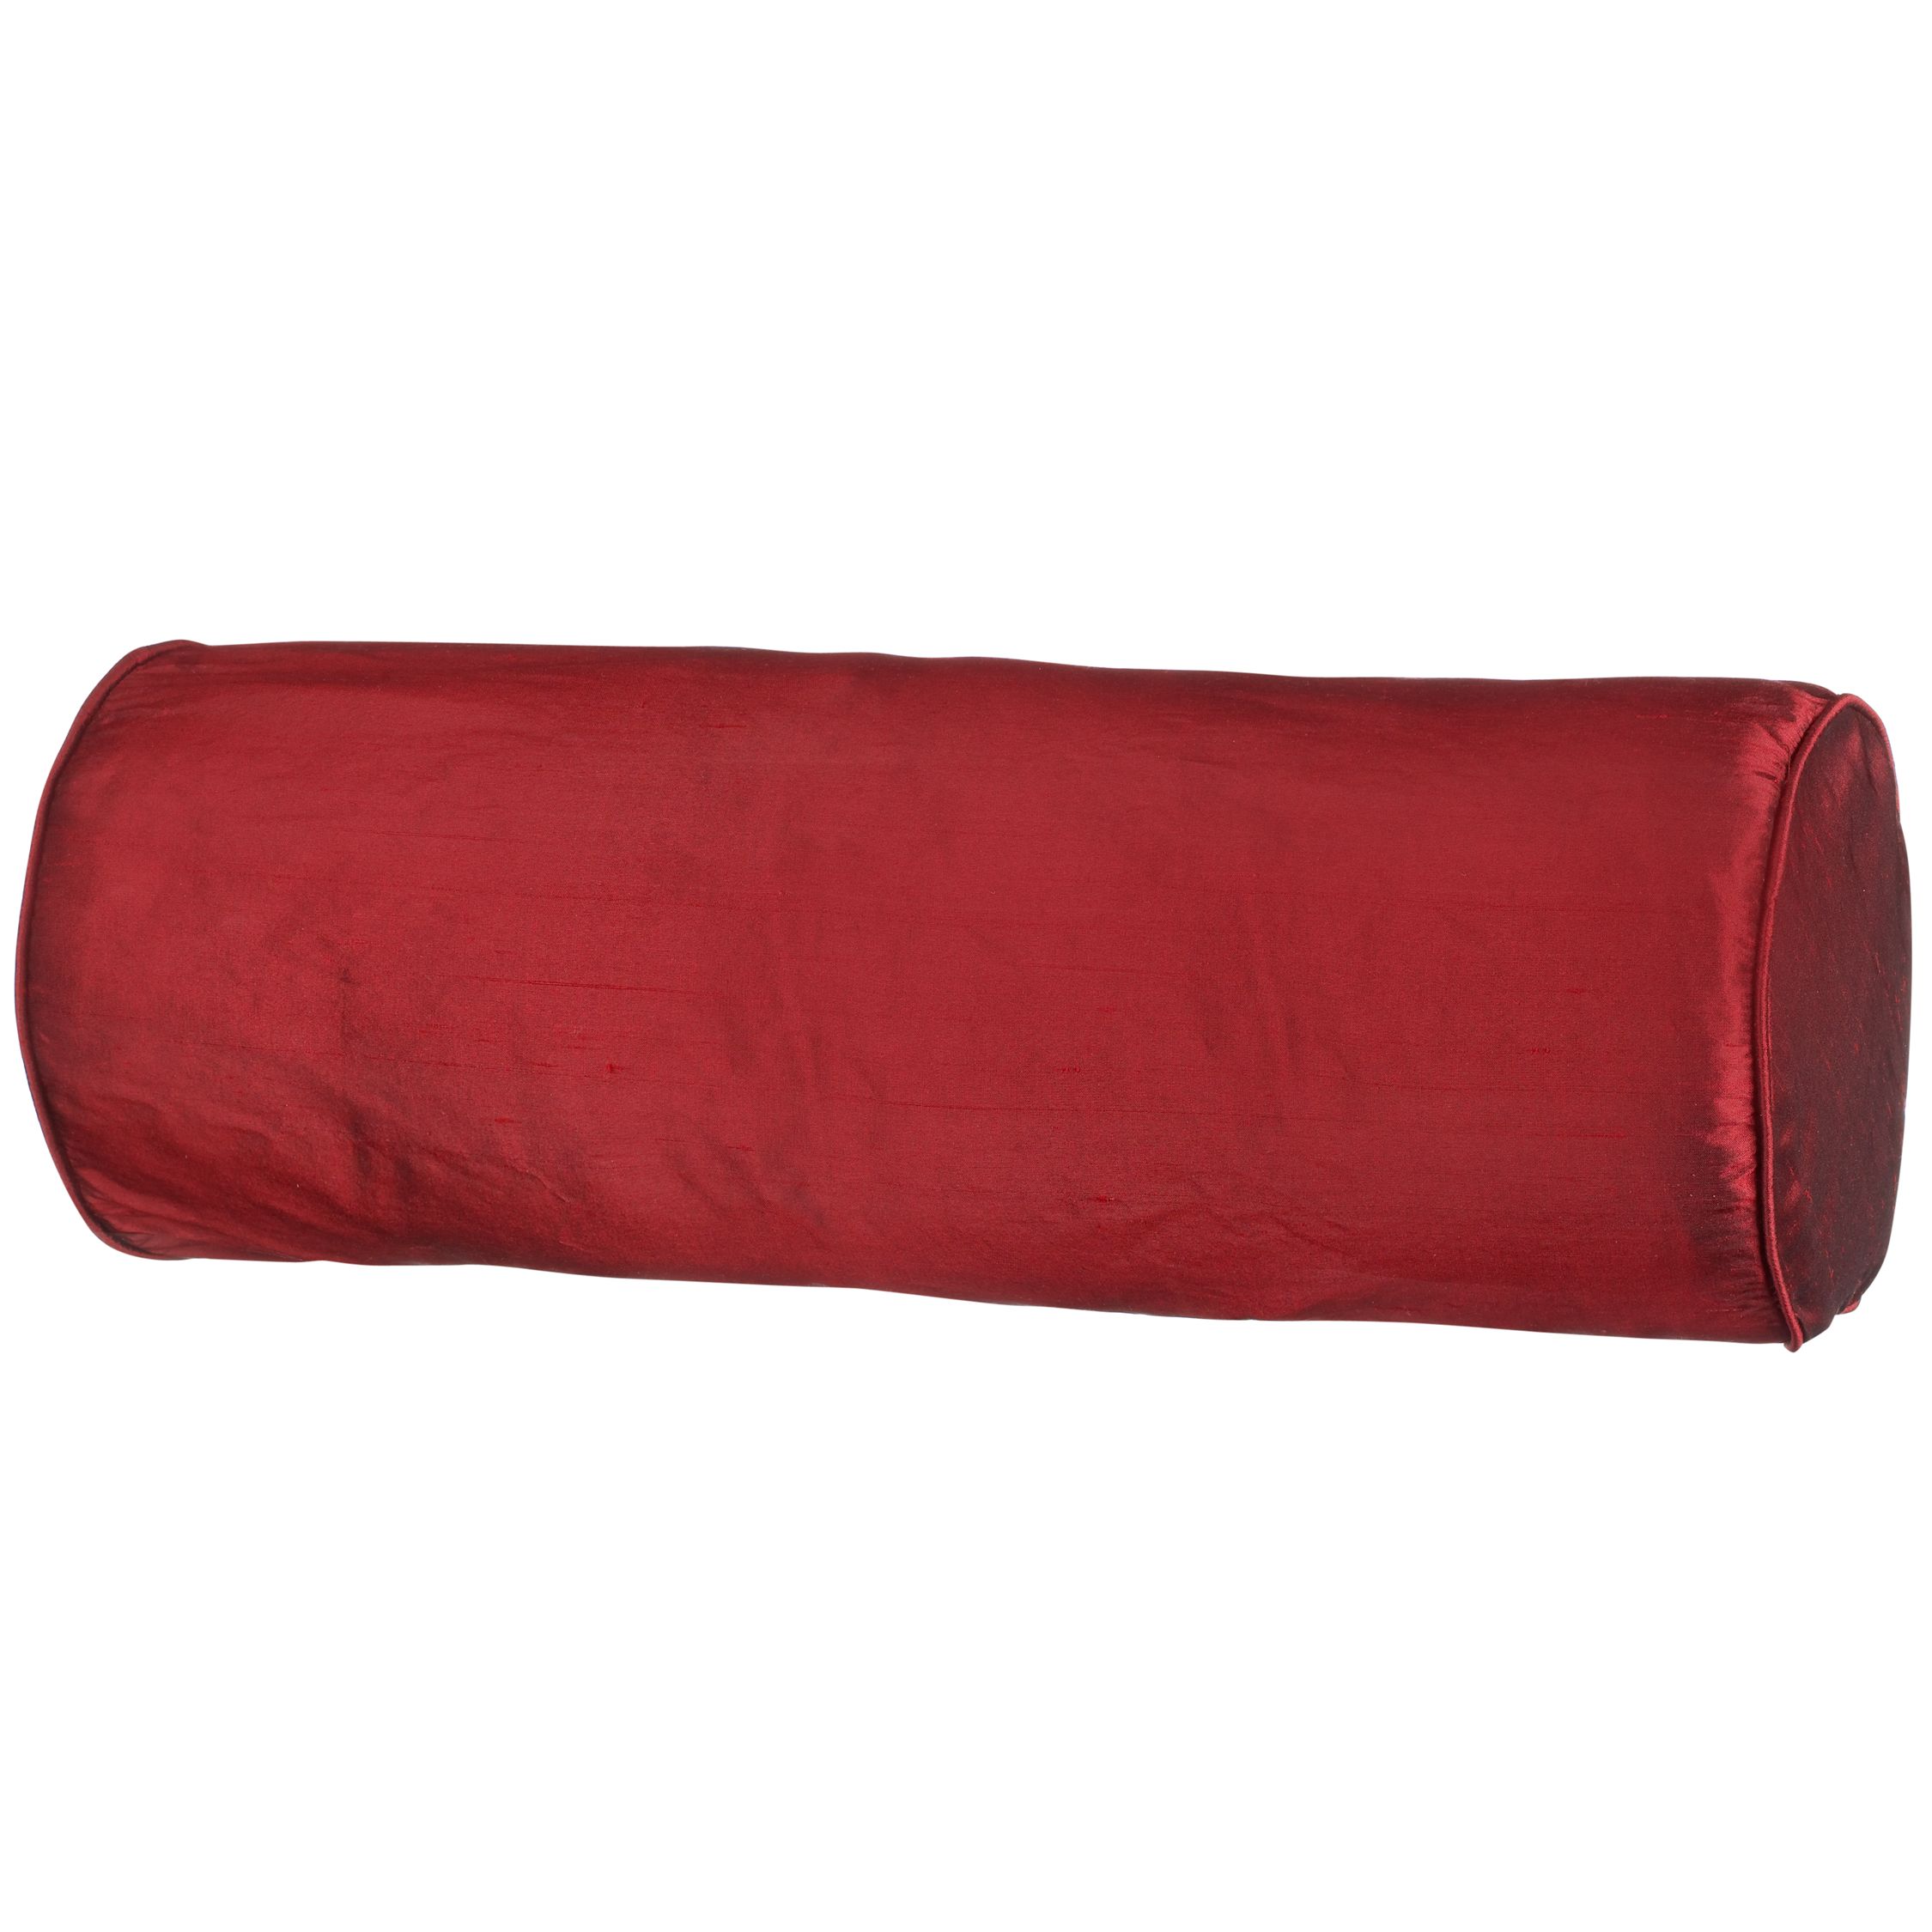 John Lewis Silk Bolster Cushion, Claret, One size